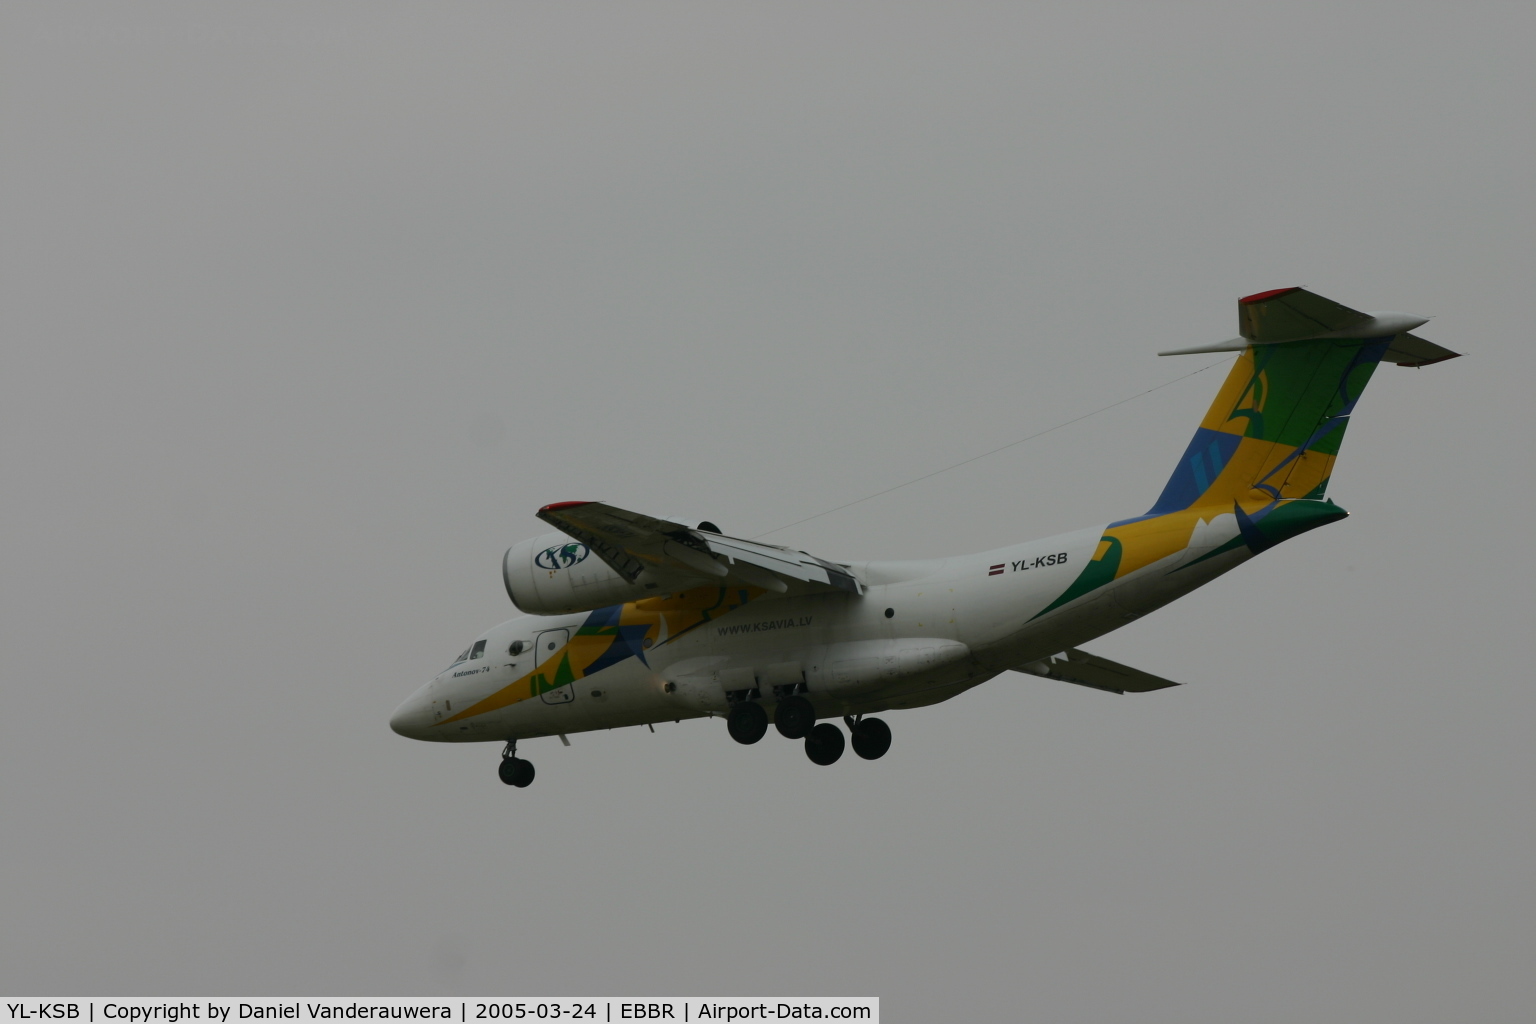 YL-KSB, 1994 Antonov An-74 C/N 36547136013, descending to rwy 25R